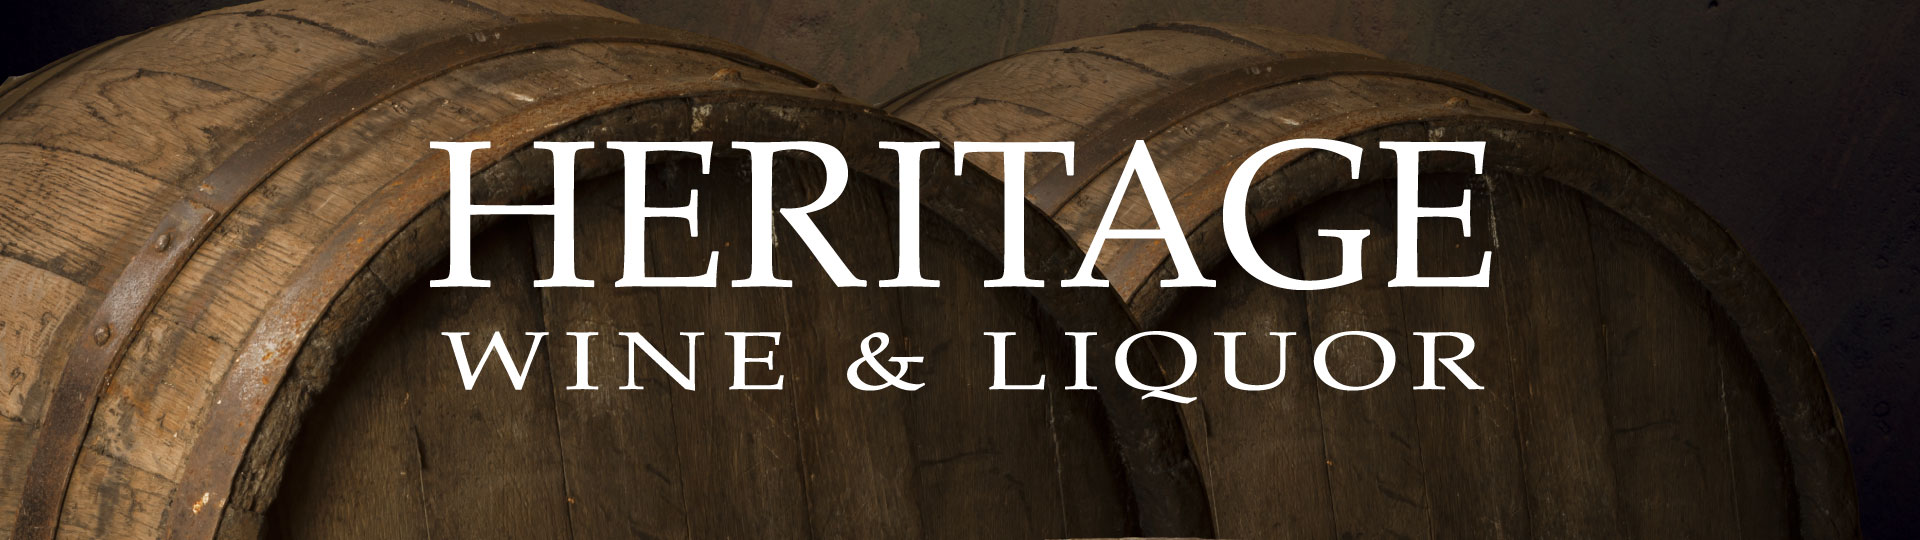 Heritage Wine & Liquor